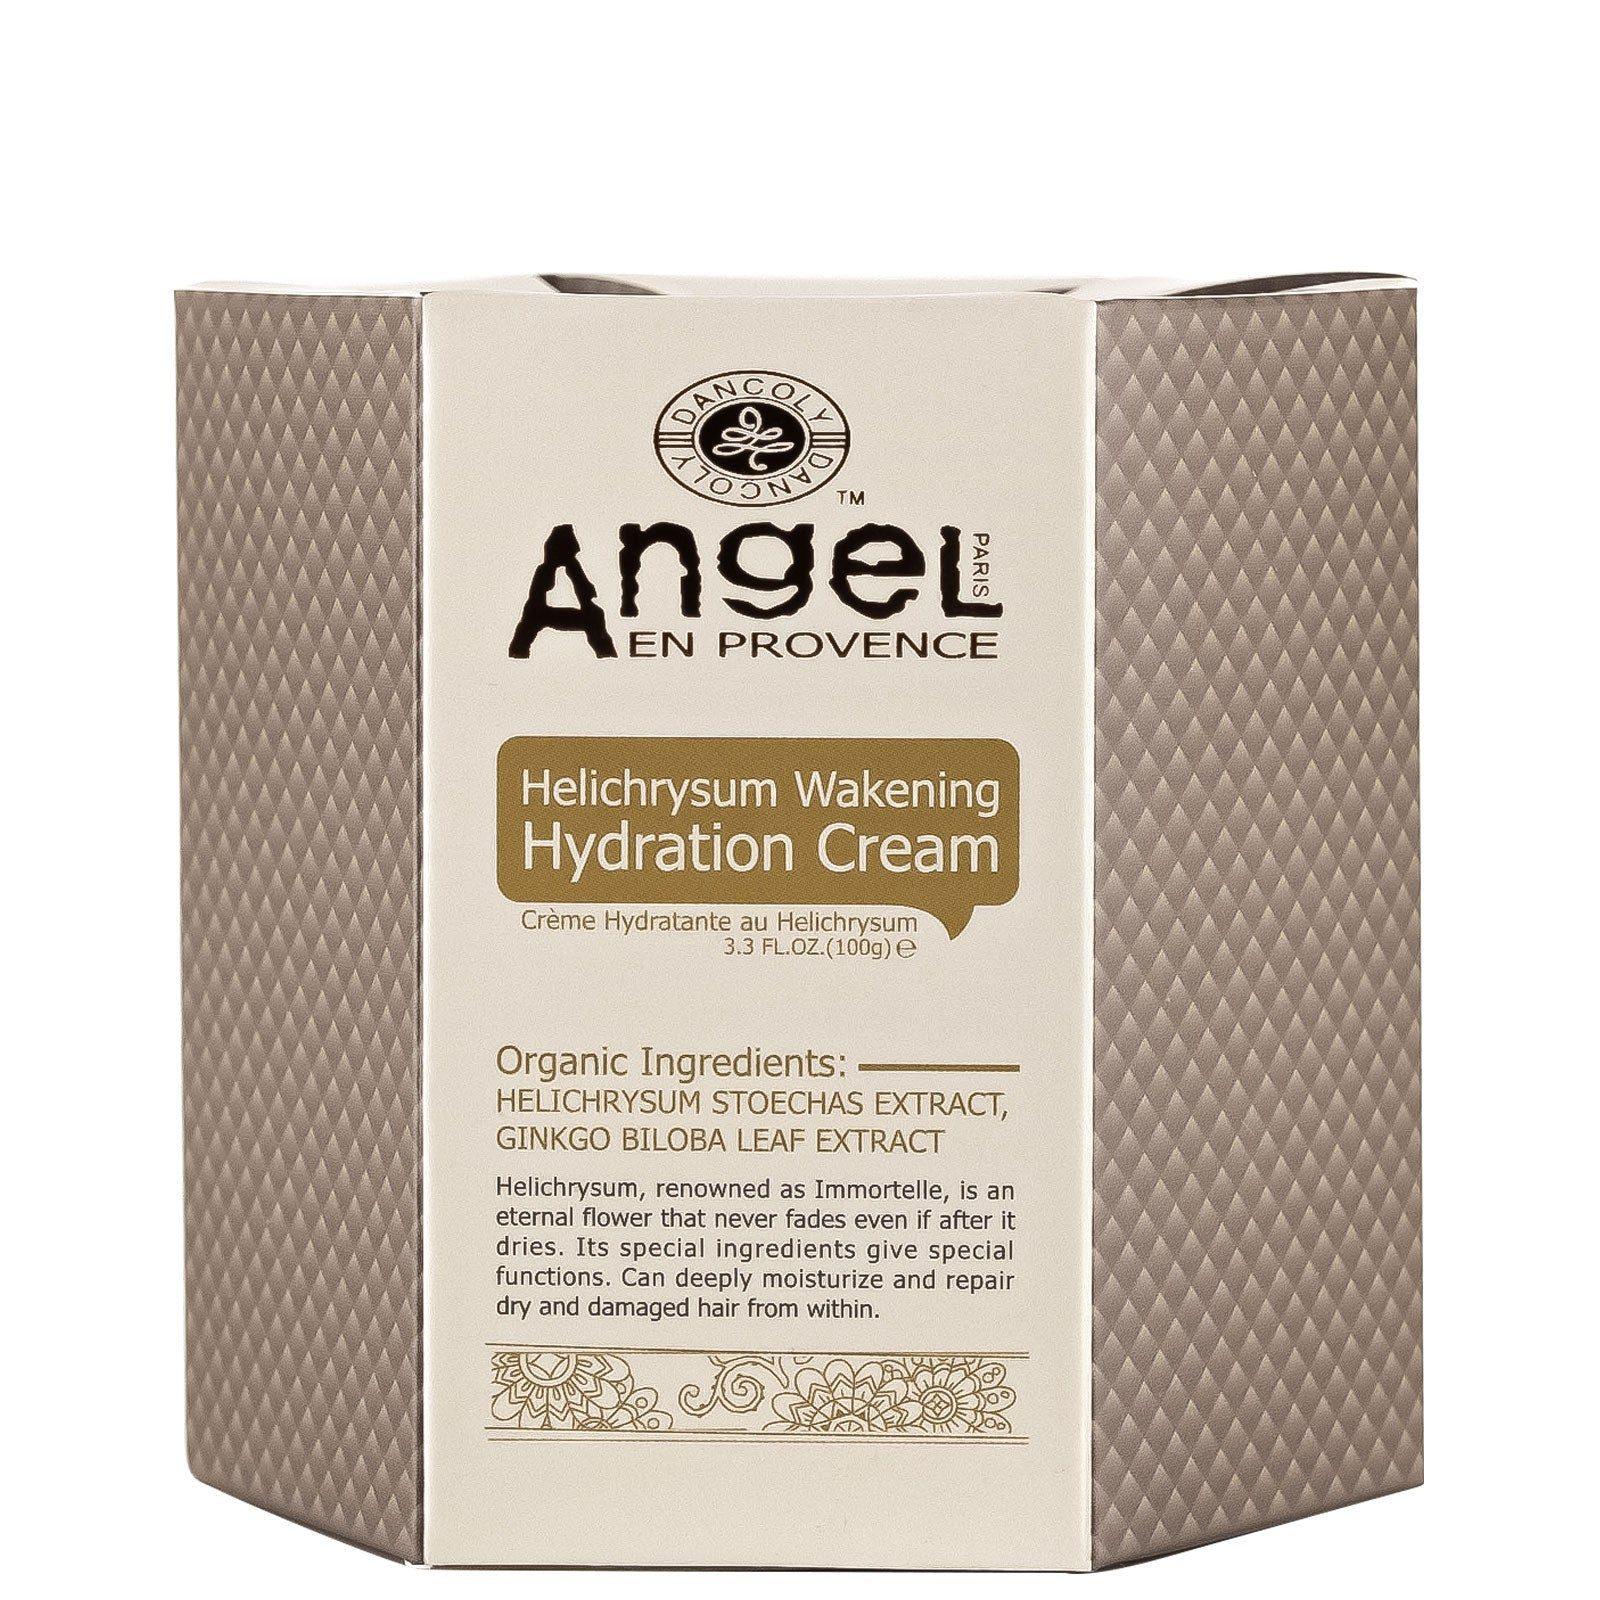 Angel Helichrysum Wakening Hydration Cream 100g - Angel